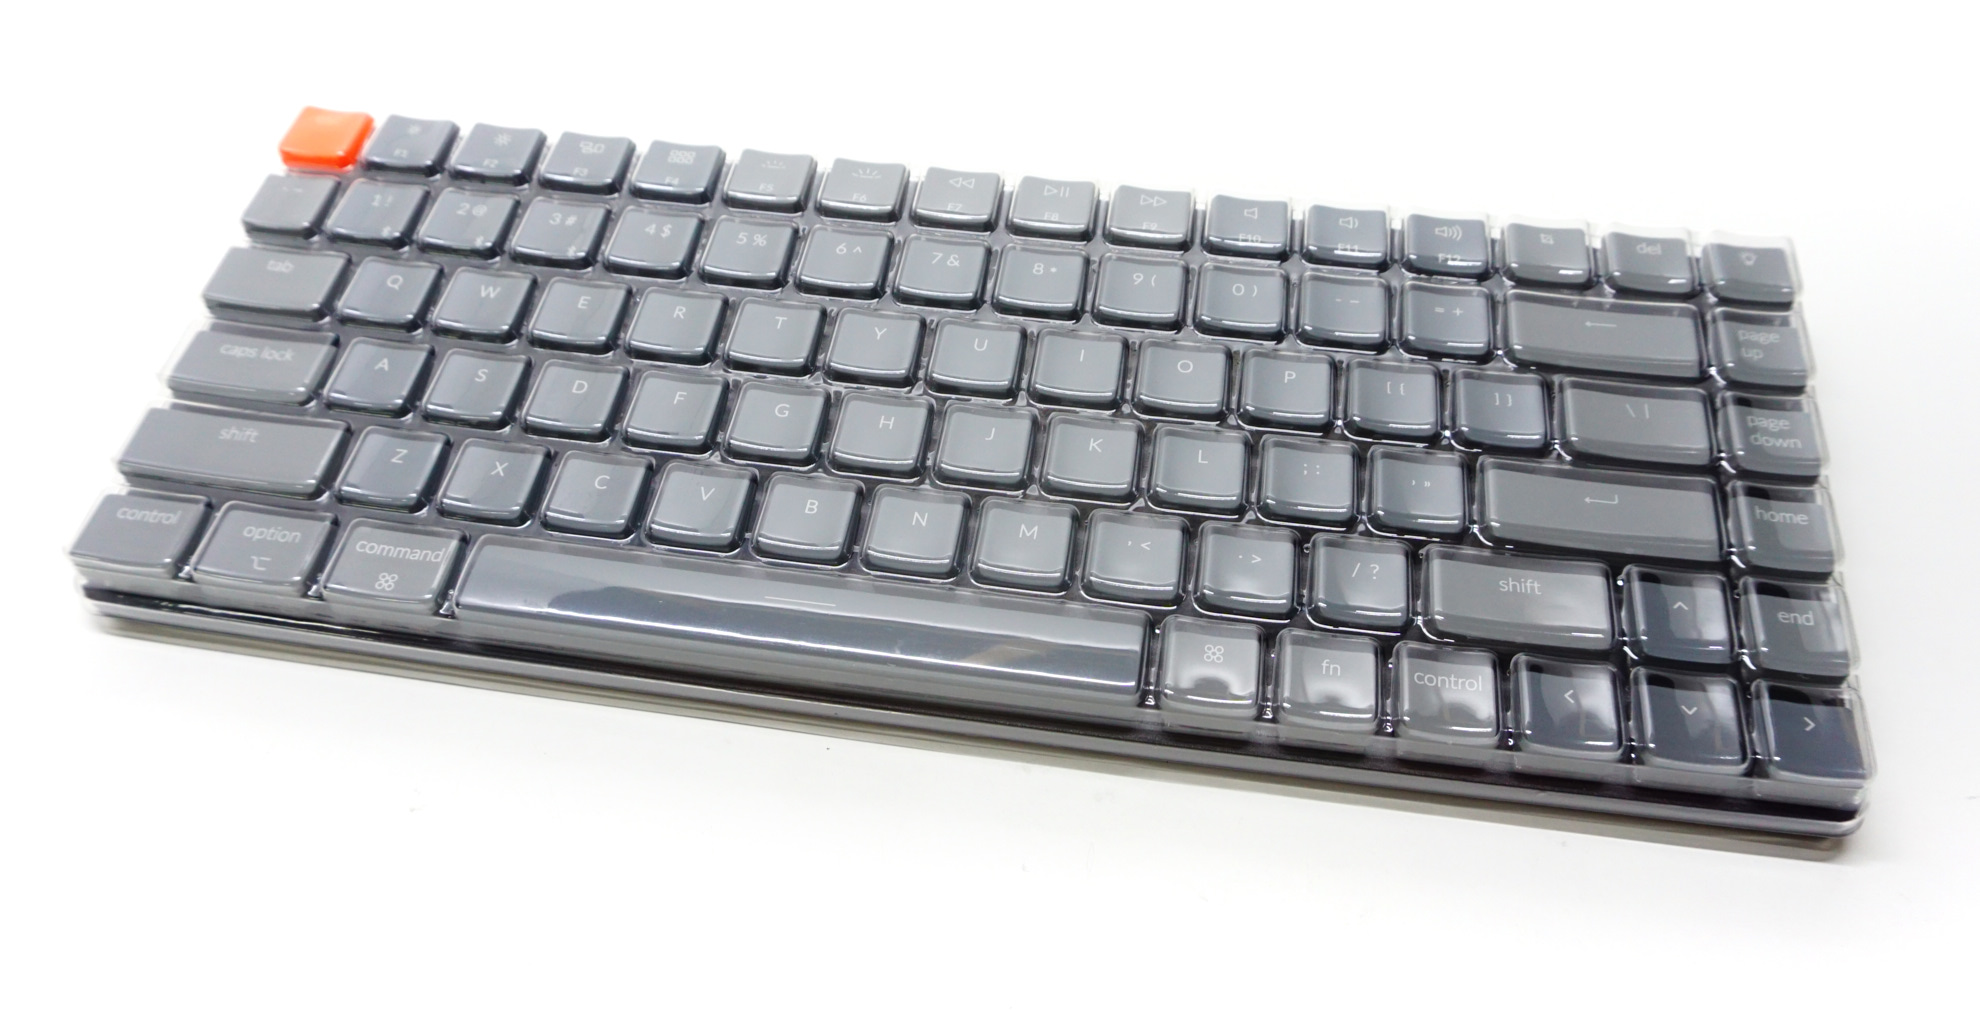 The Keychron K3 Low Profile Wireless Mechanical Keyboard Review